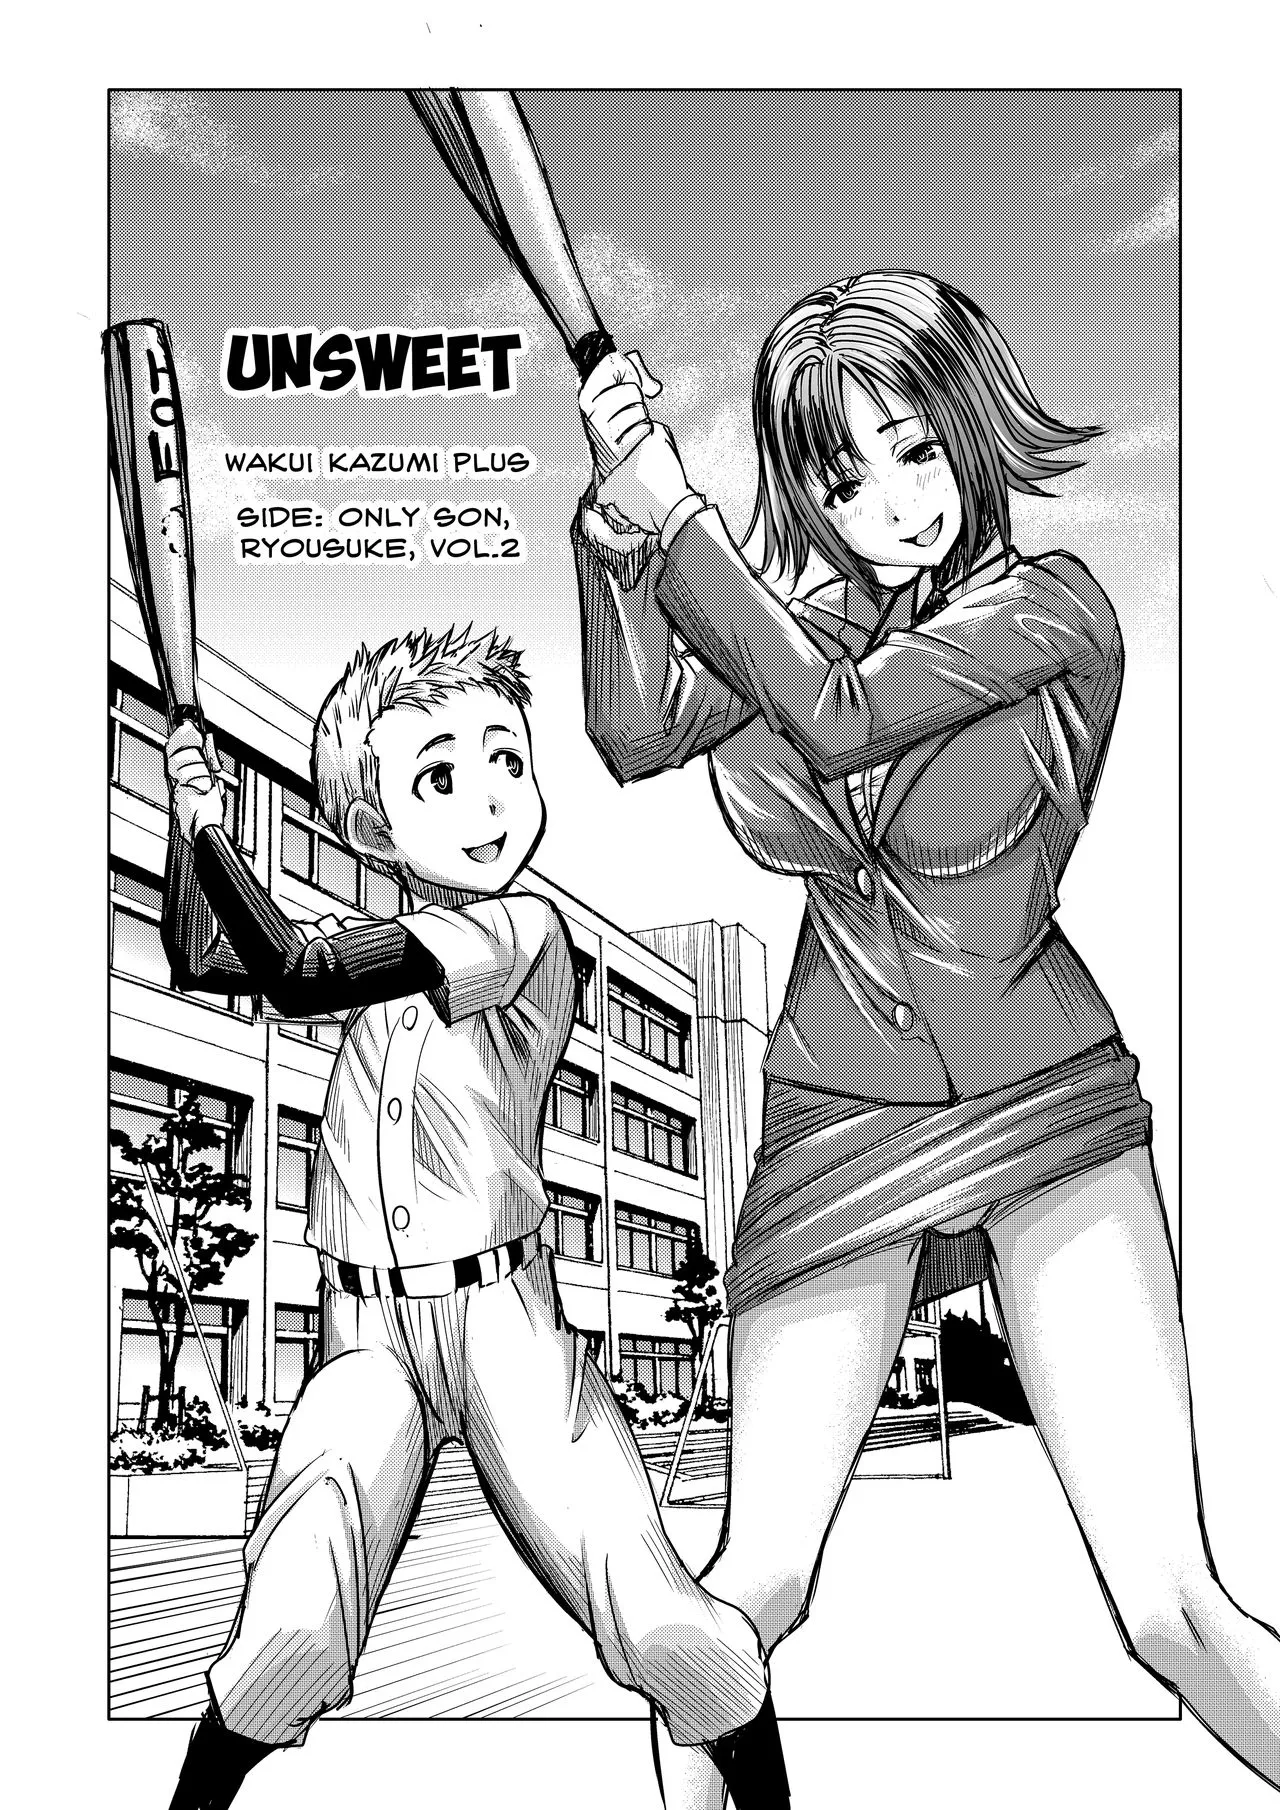 Unsweet Haha Kazumi Wakui Plus SIDE Hitori Musuko Ryosuke vol. 2-1